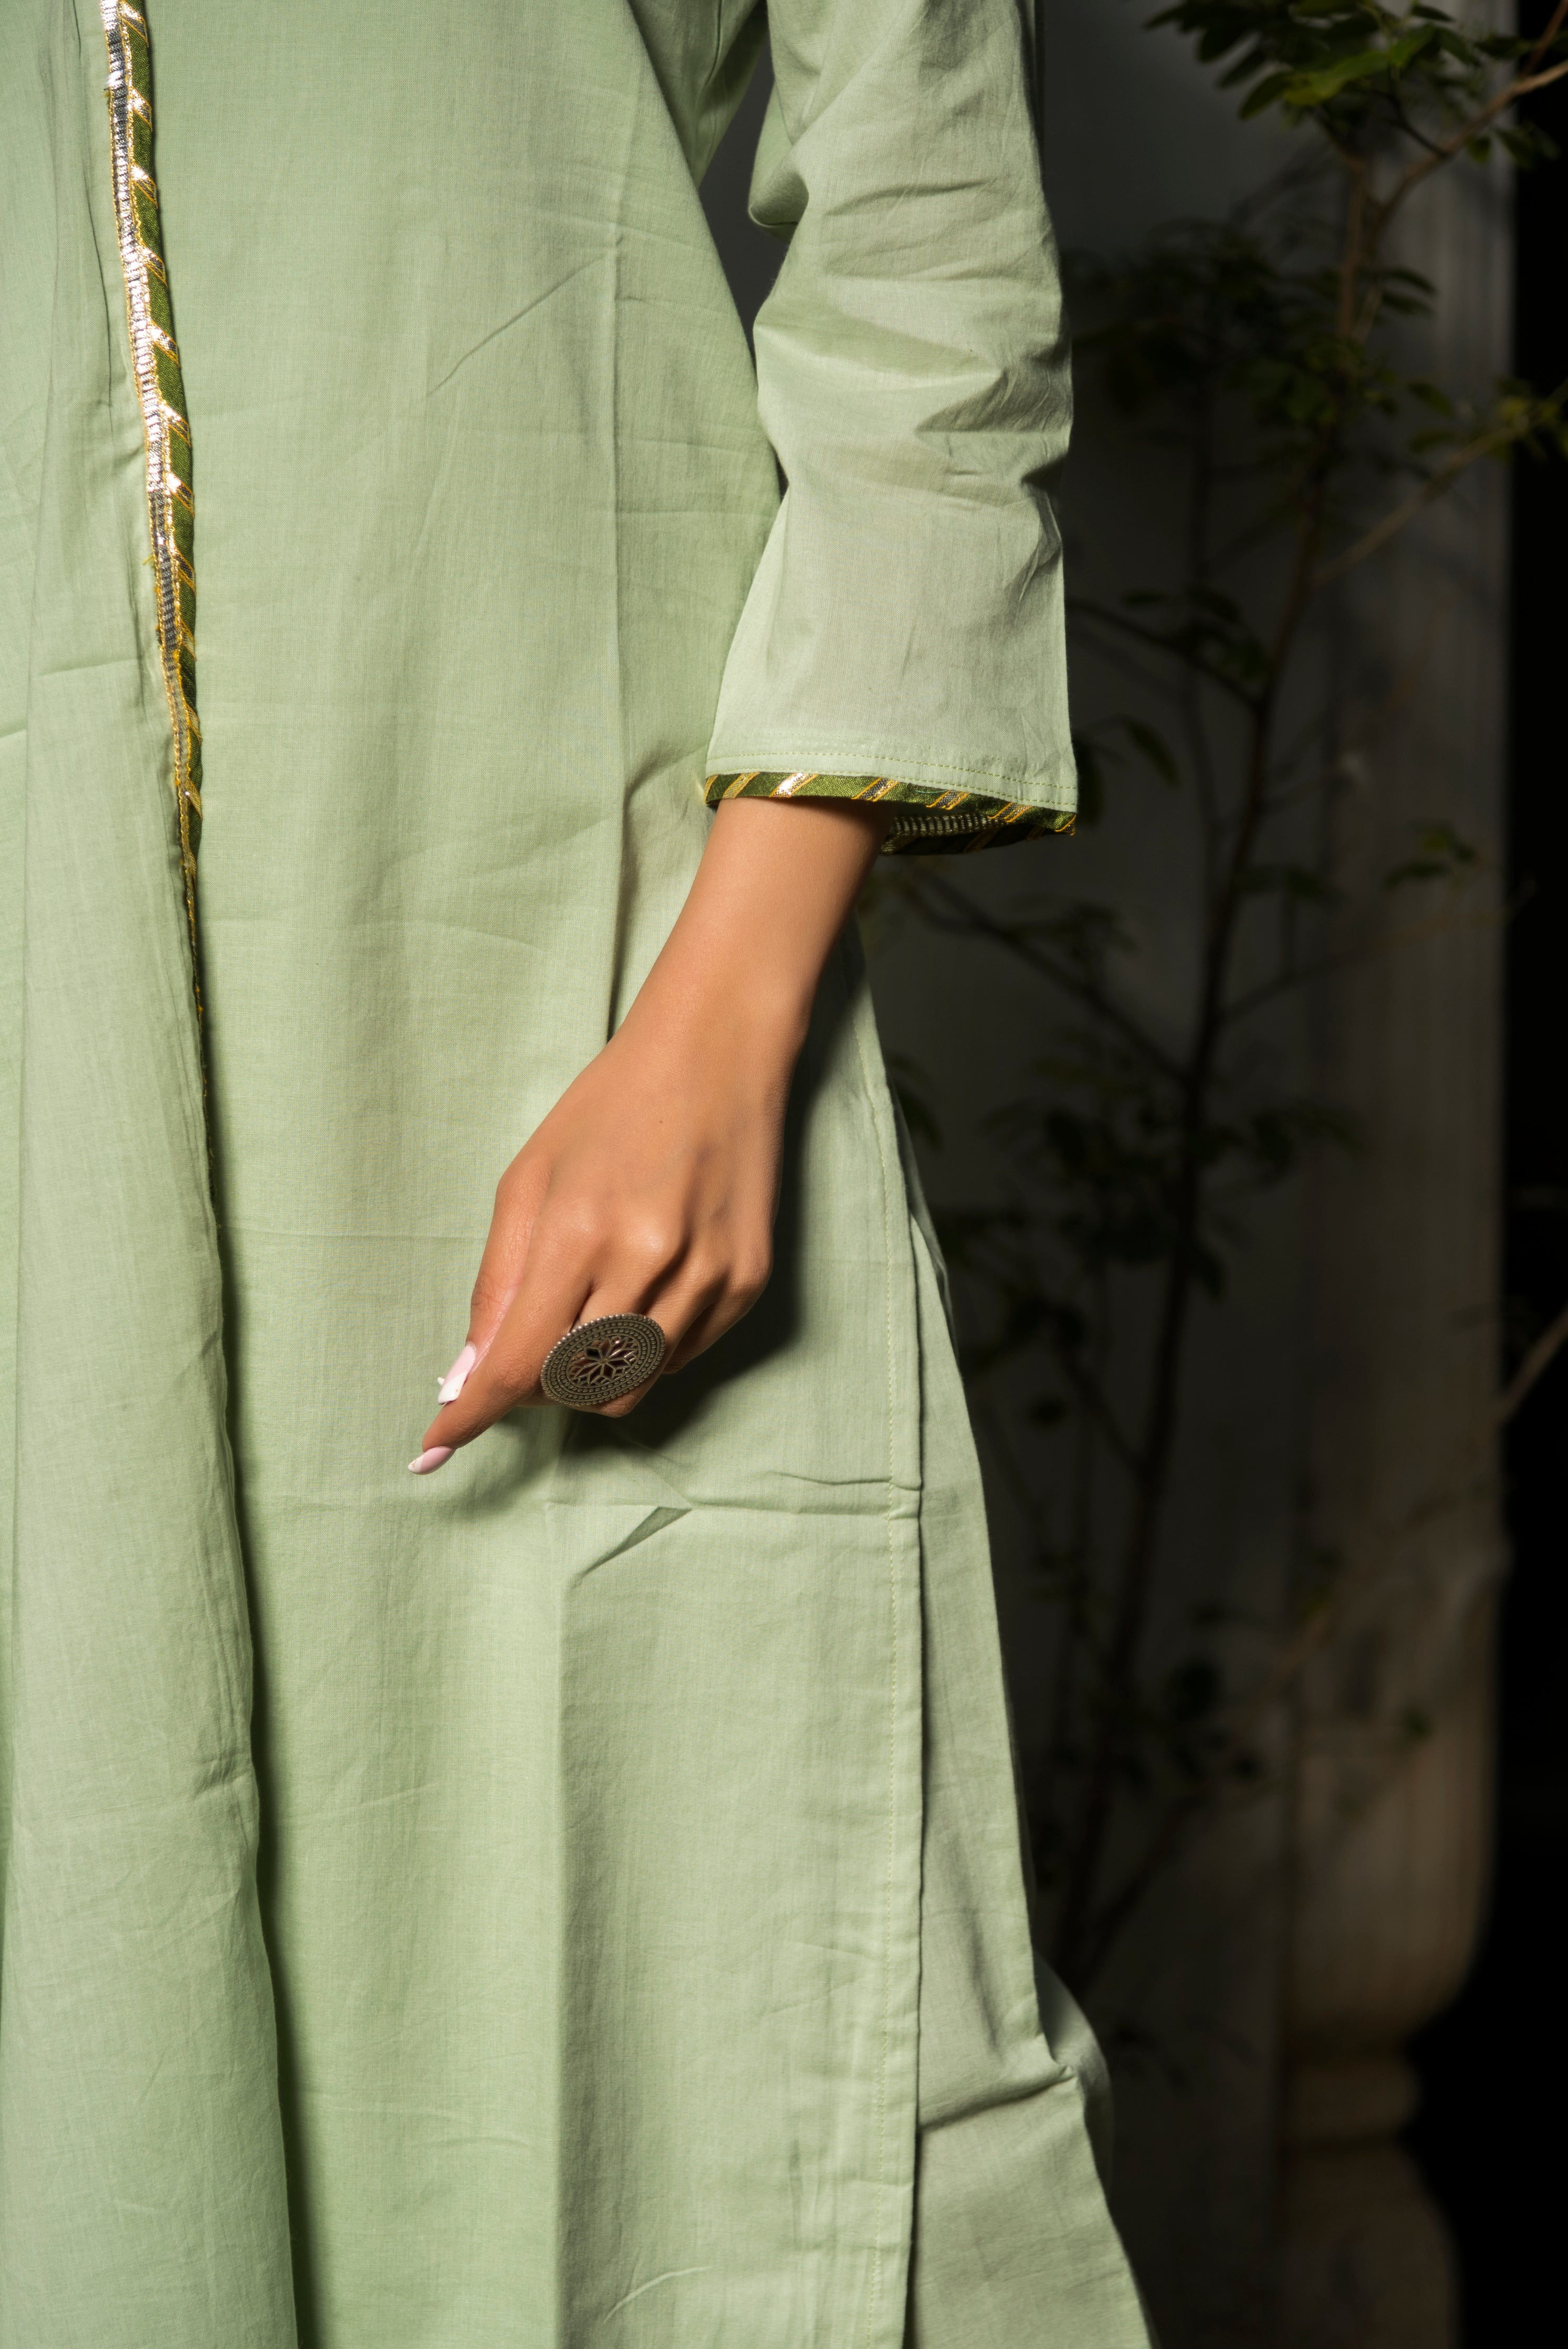 Women's olive green cotton straight kurta set - Pomcha Jaipur